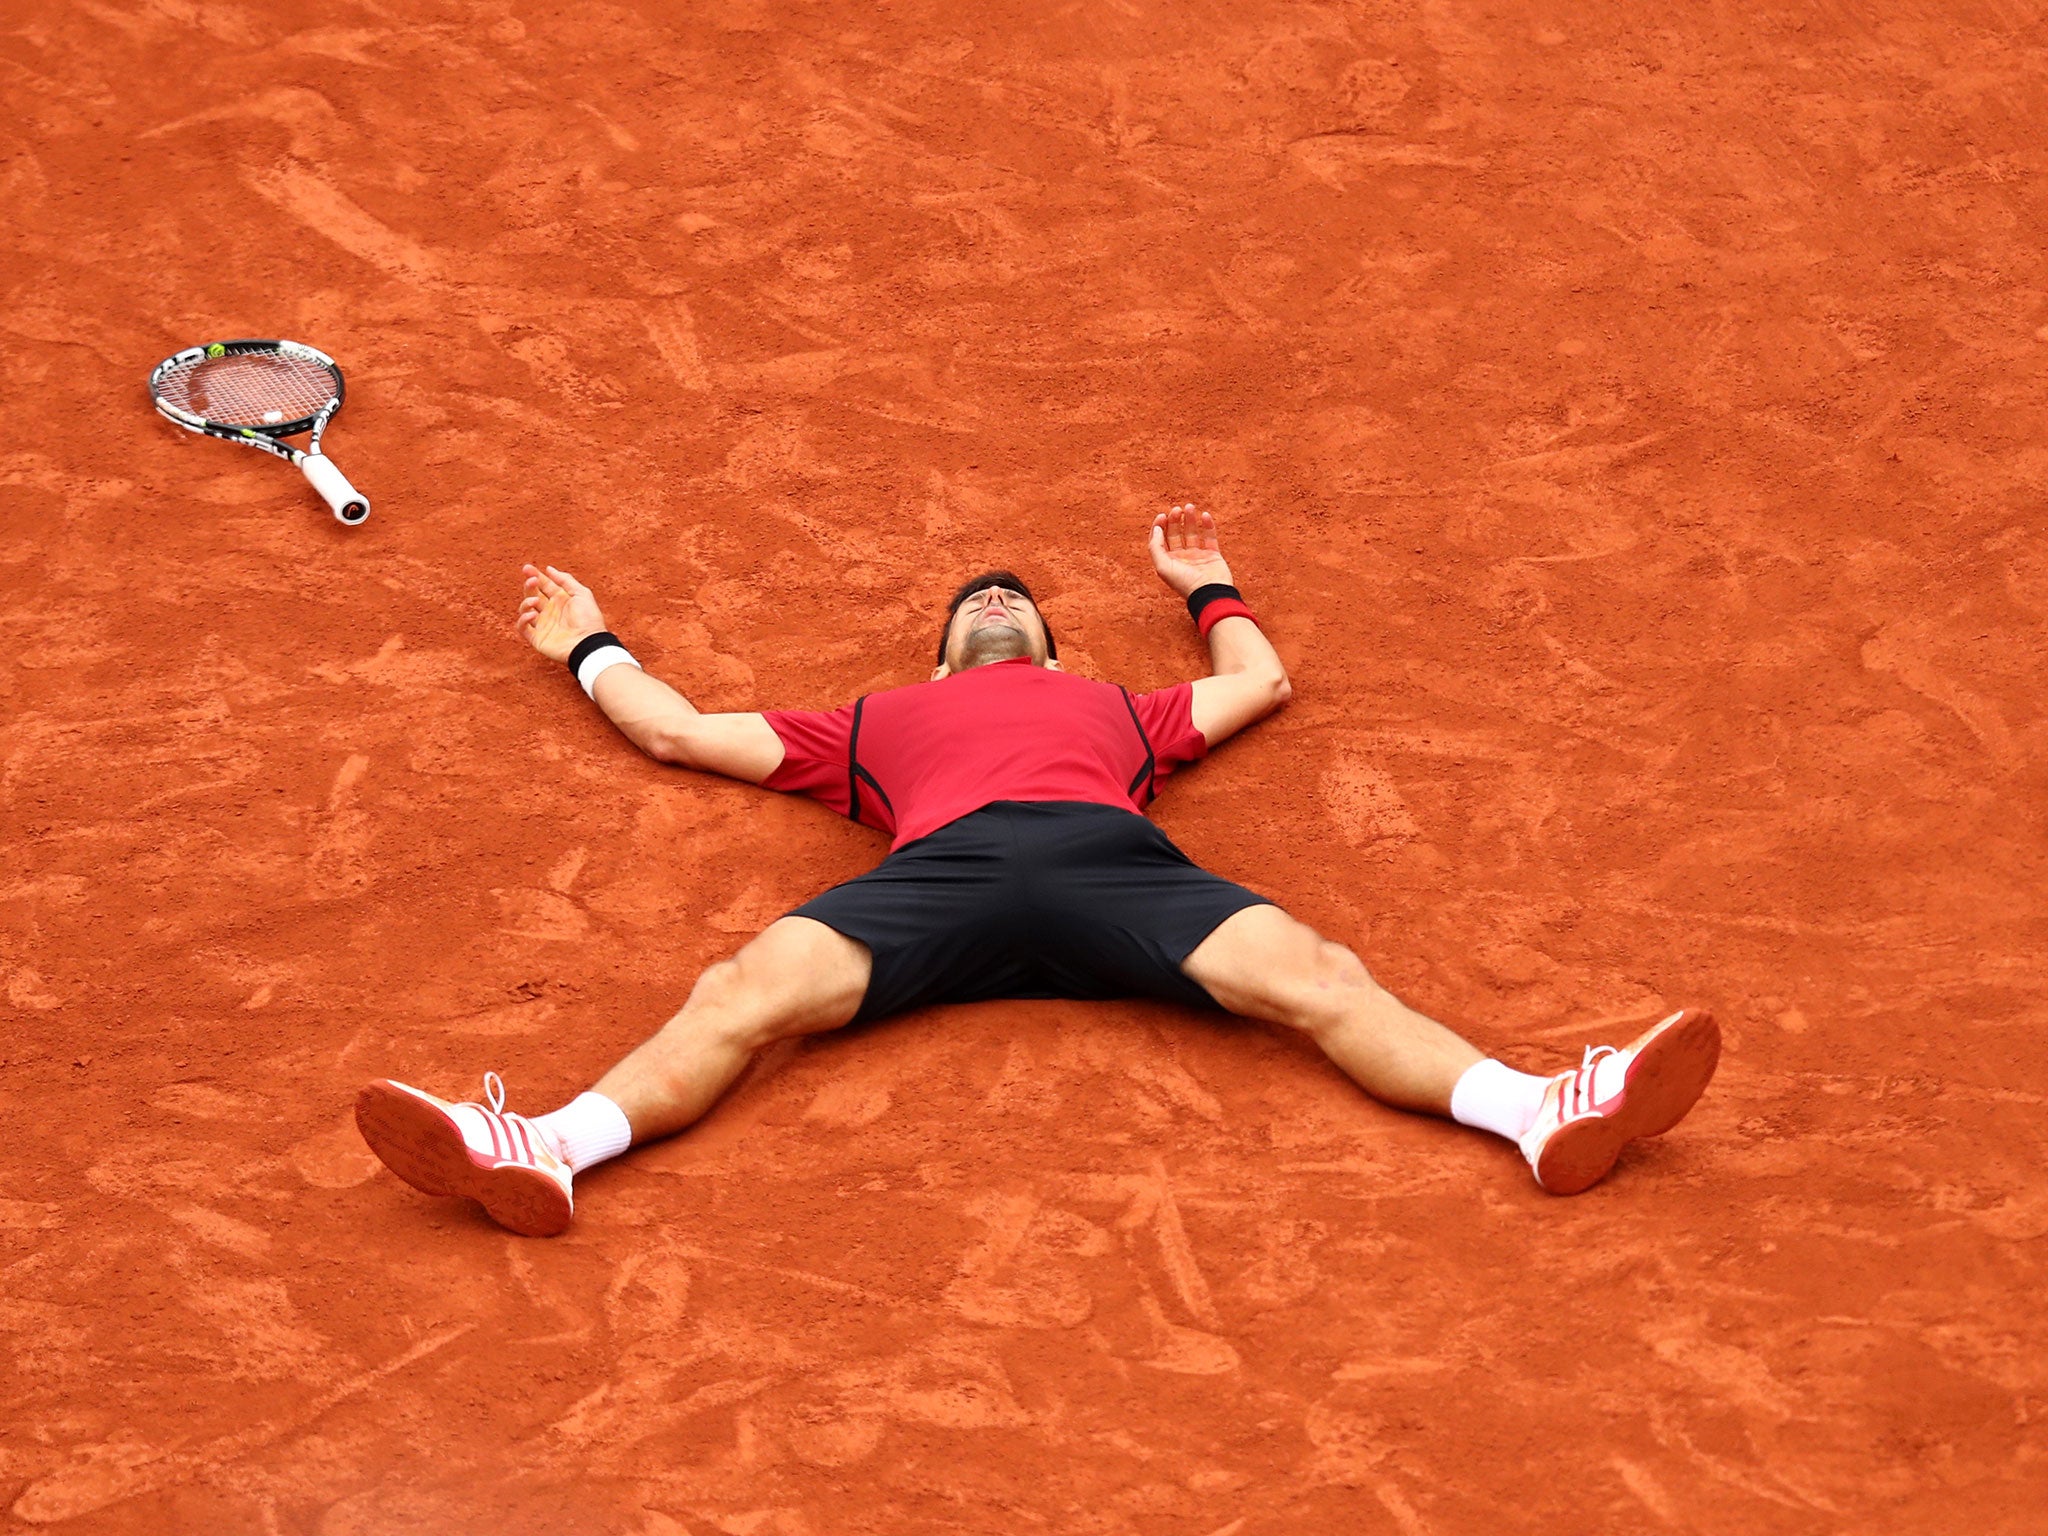 Novak Djokovic celebrates victory in the French Open final